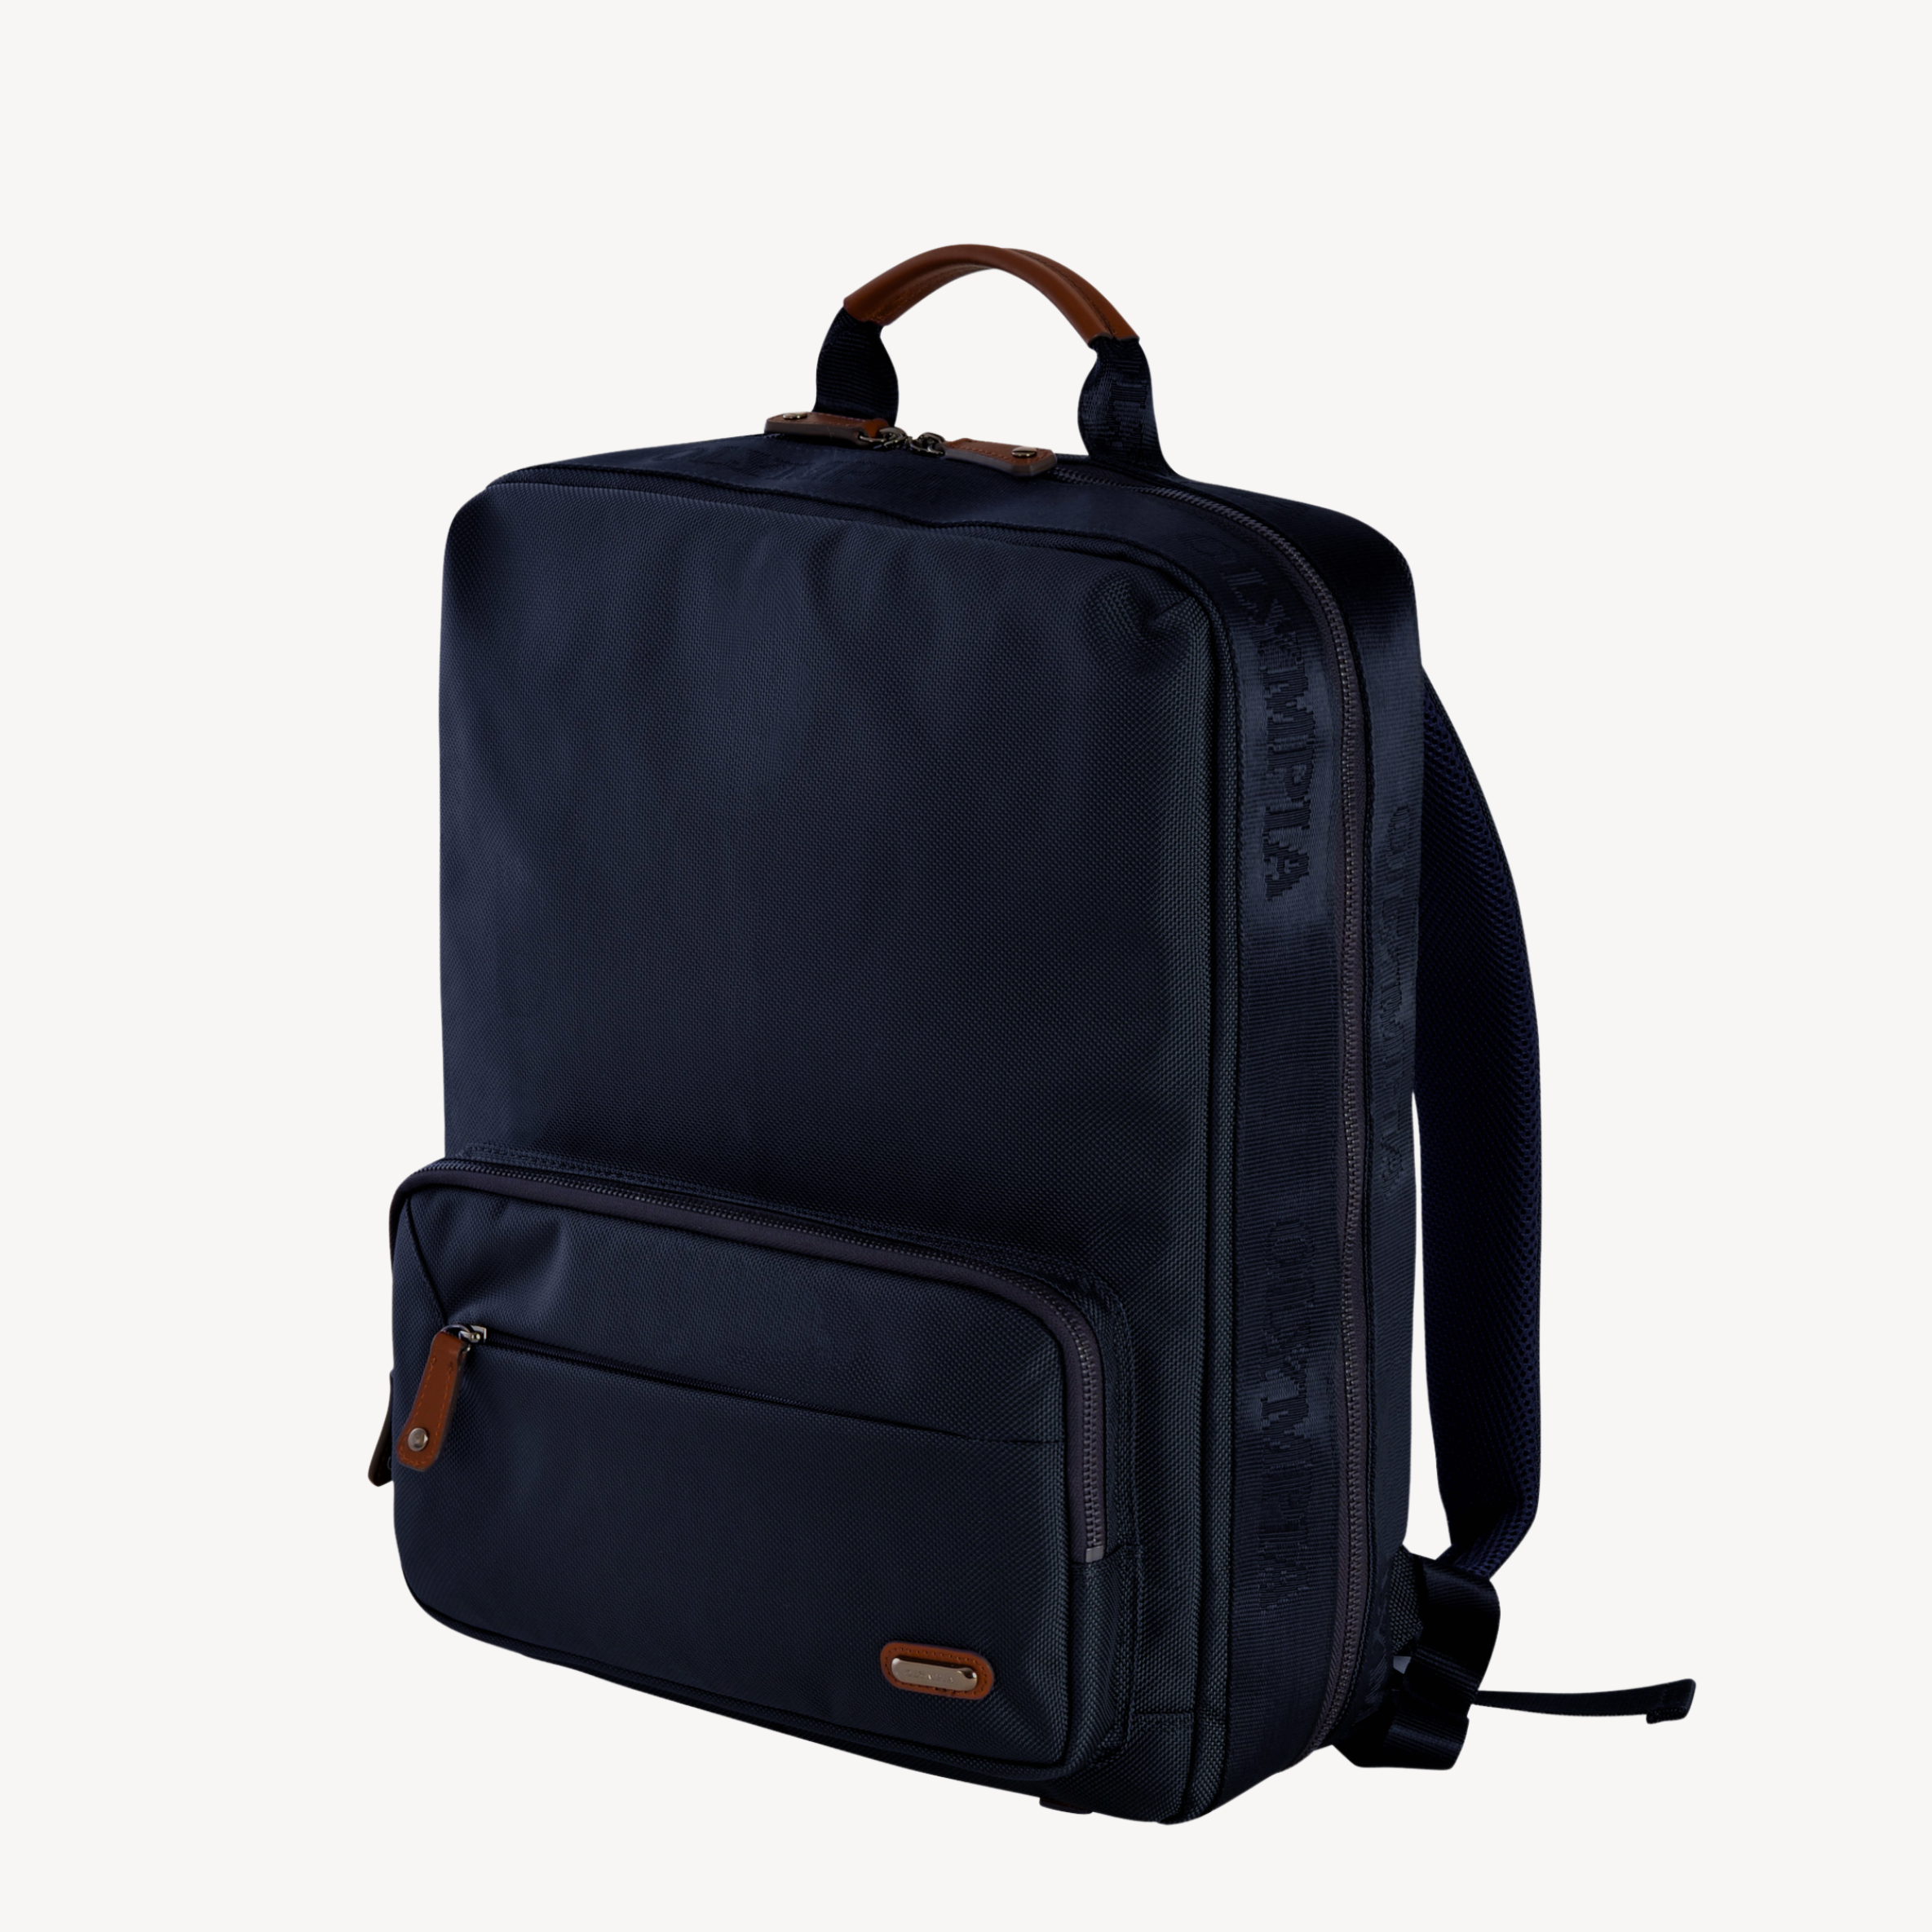 Rhodes Premium Water-Resistant Bag